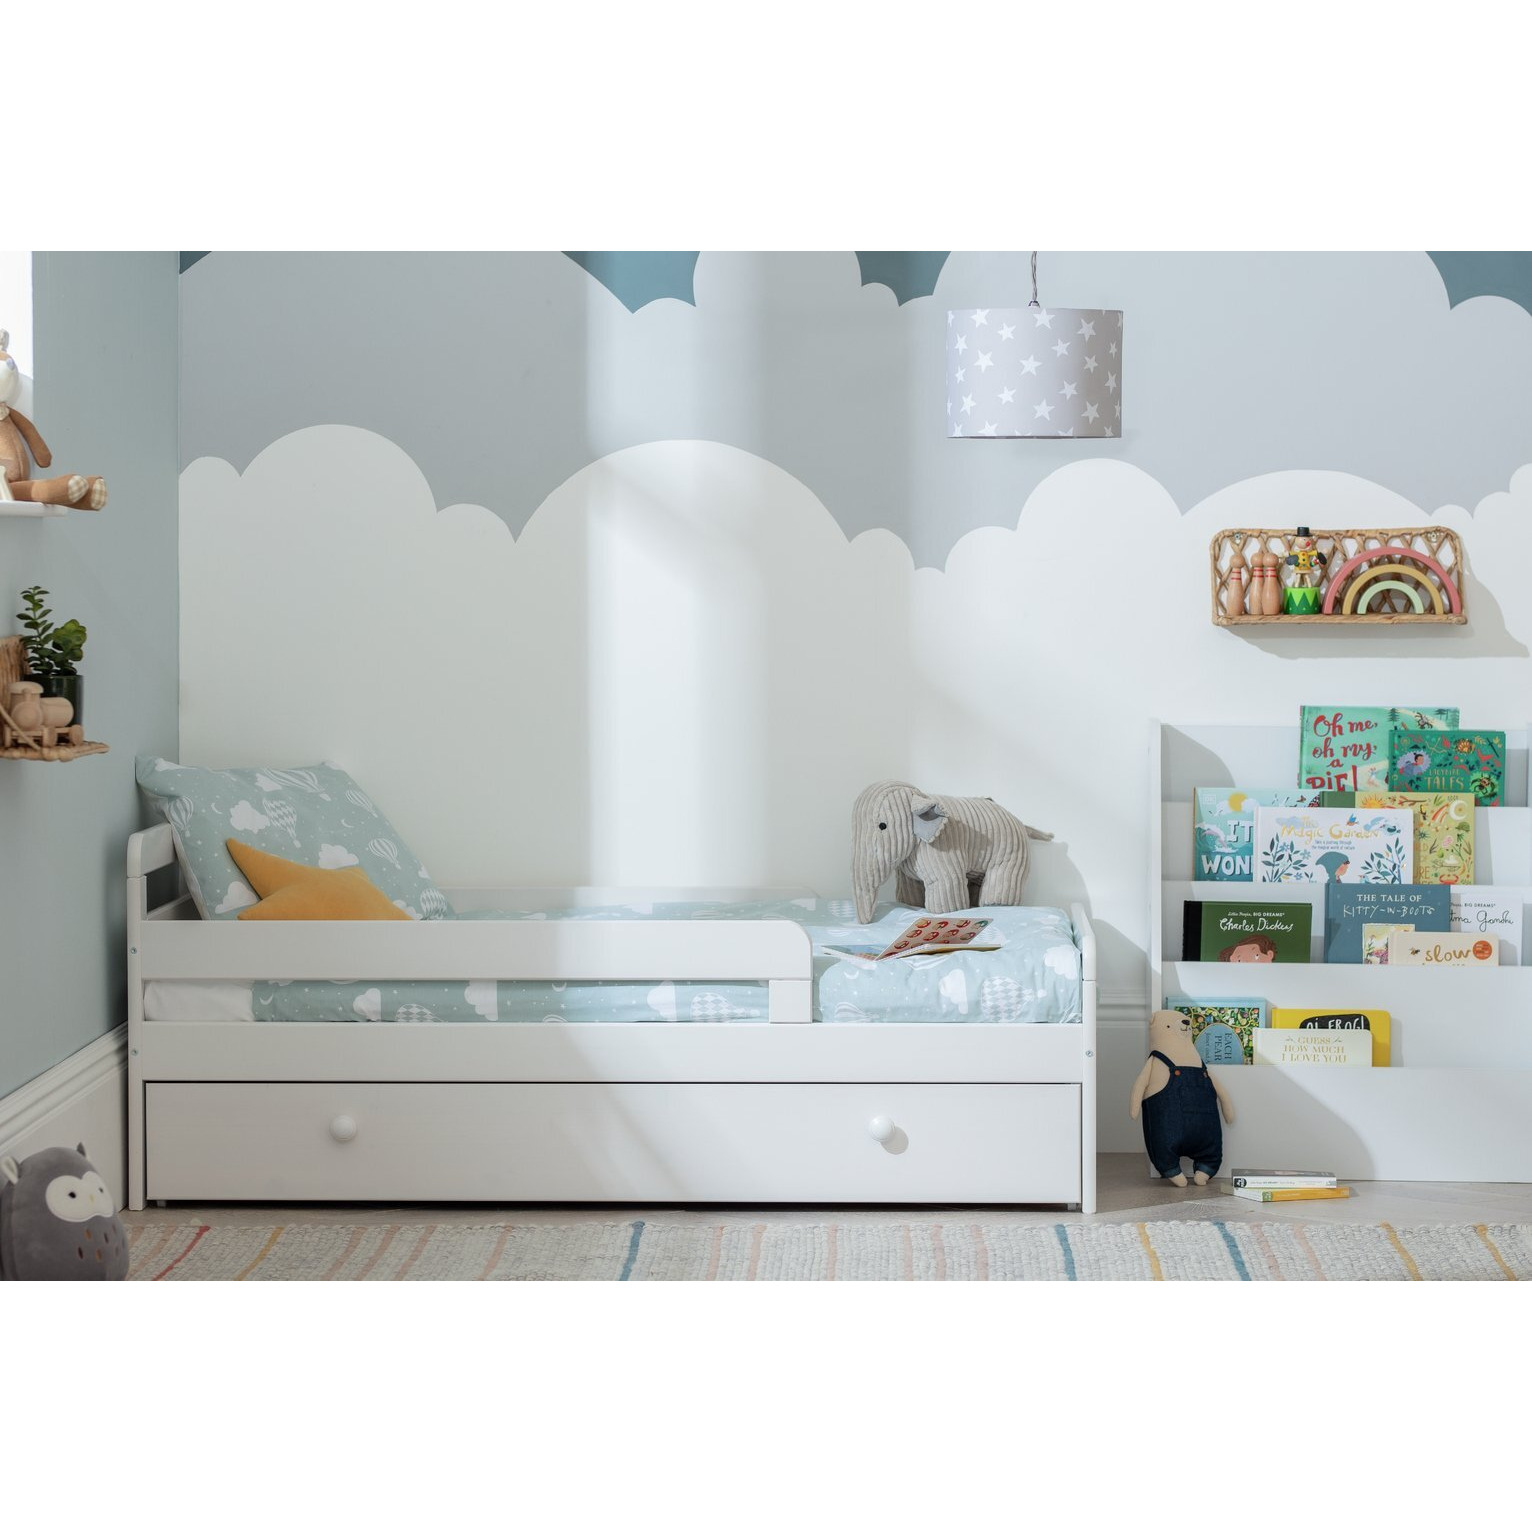 Habitat Ellis Toddler Bed Frame with Storage - White - image 1